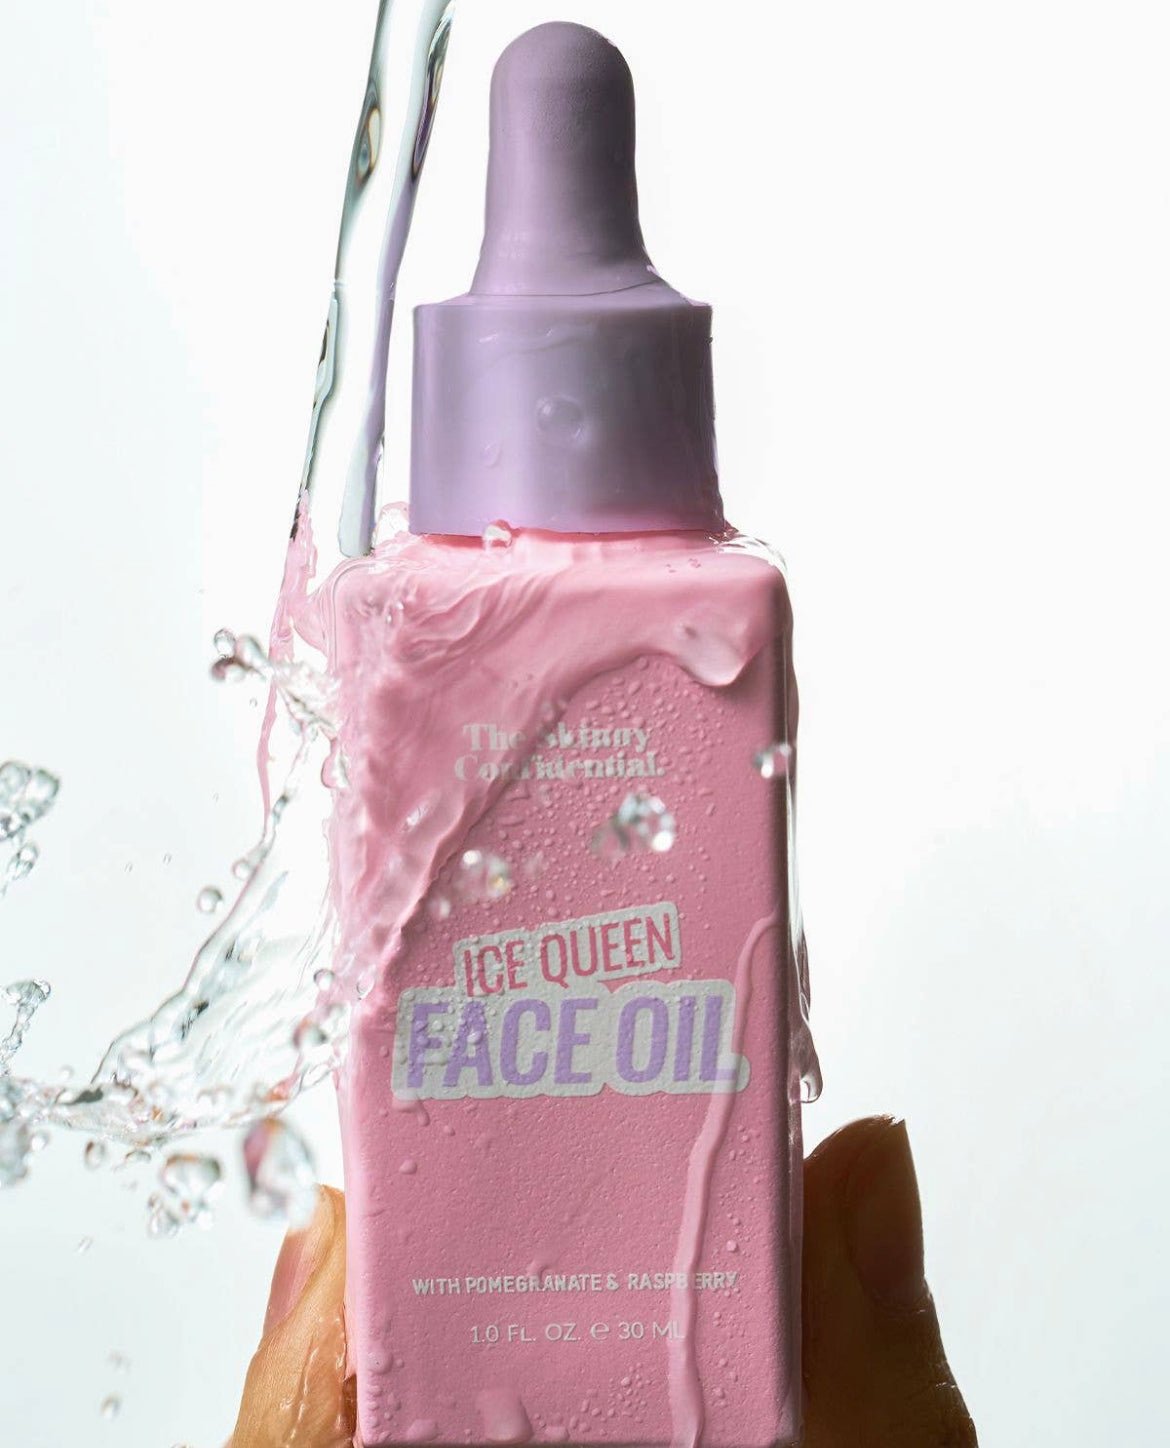 Ice Queen Face Oil - Blend Box